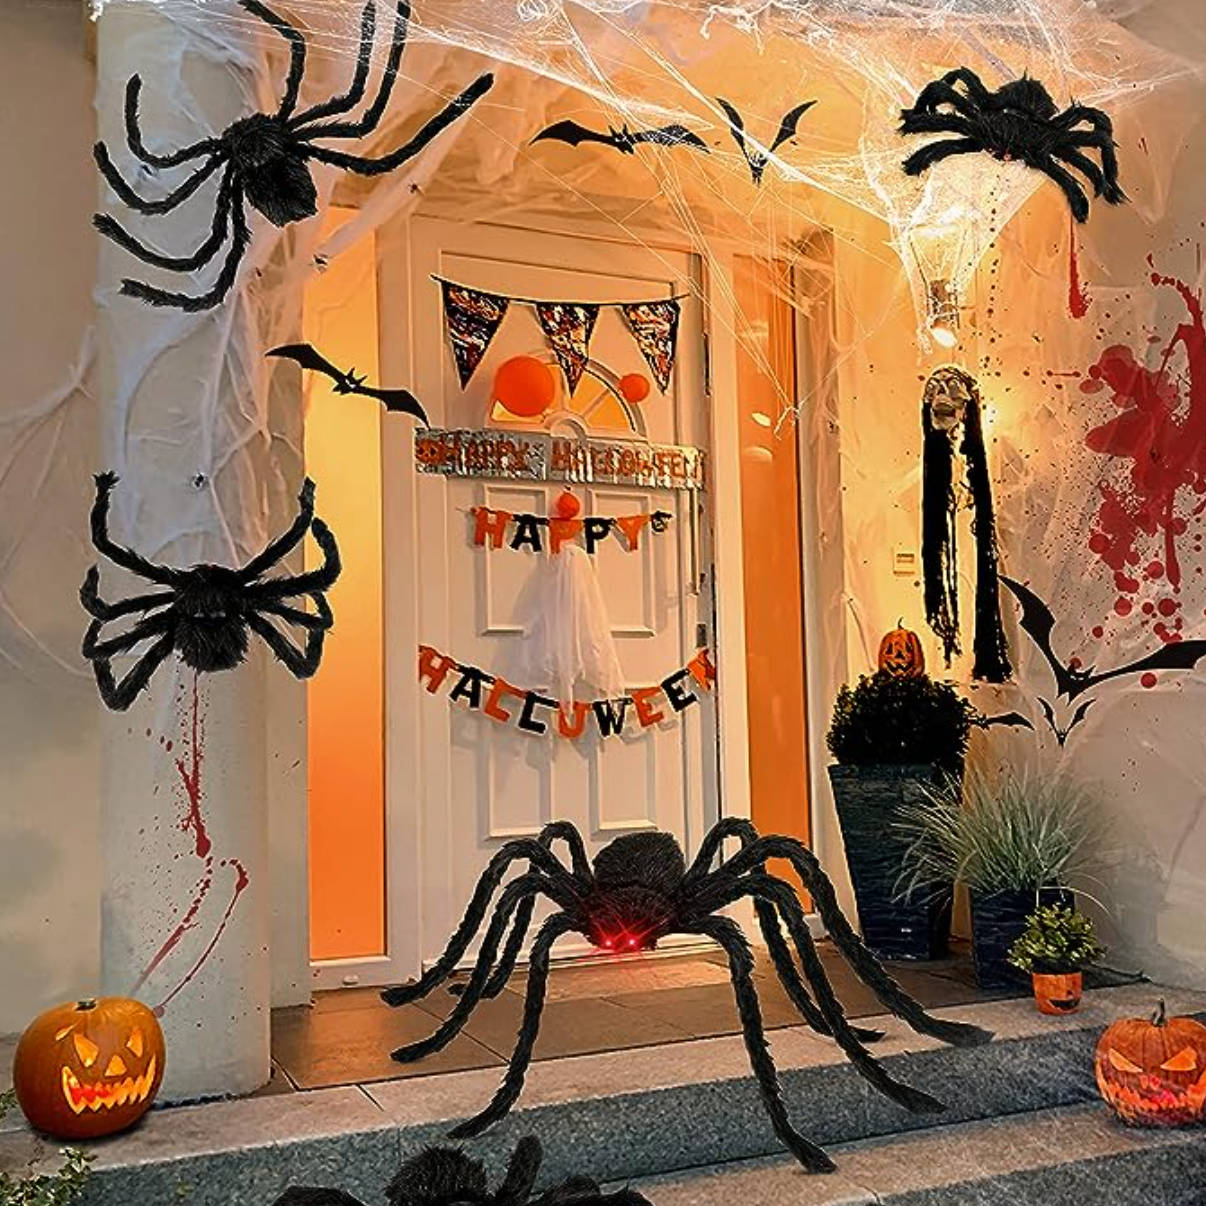 Halloween Home Decor Designs Ideas In 2023